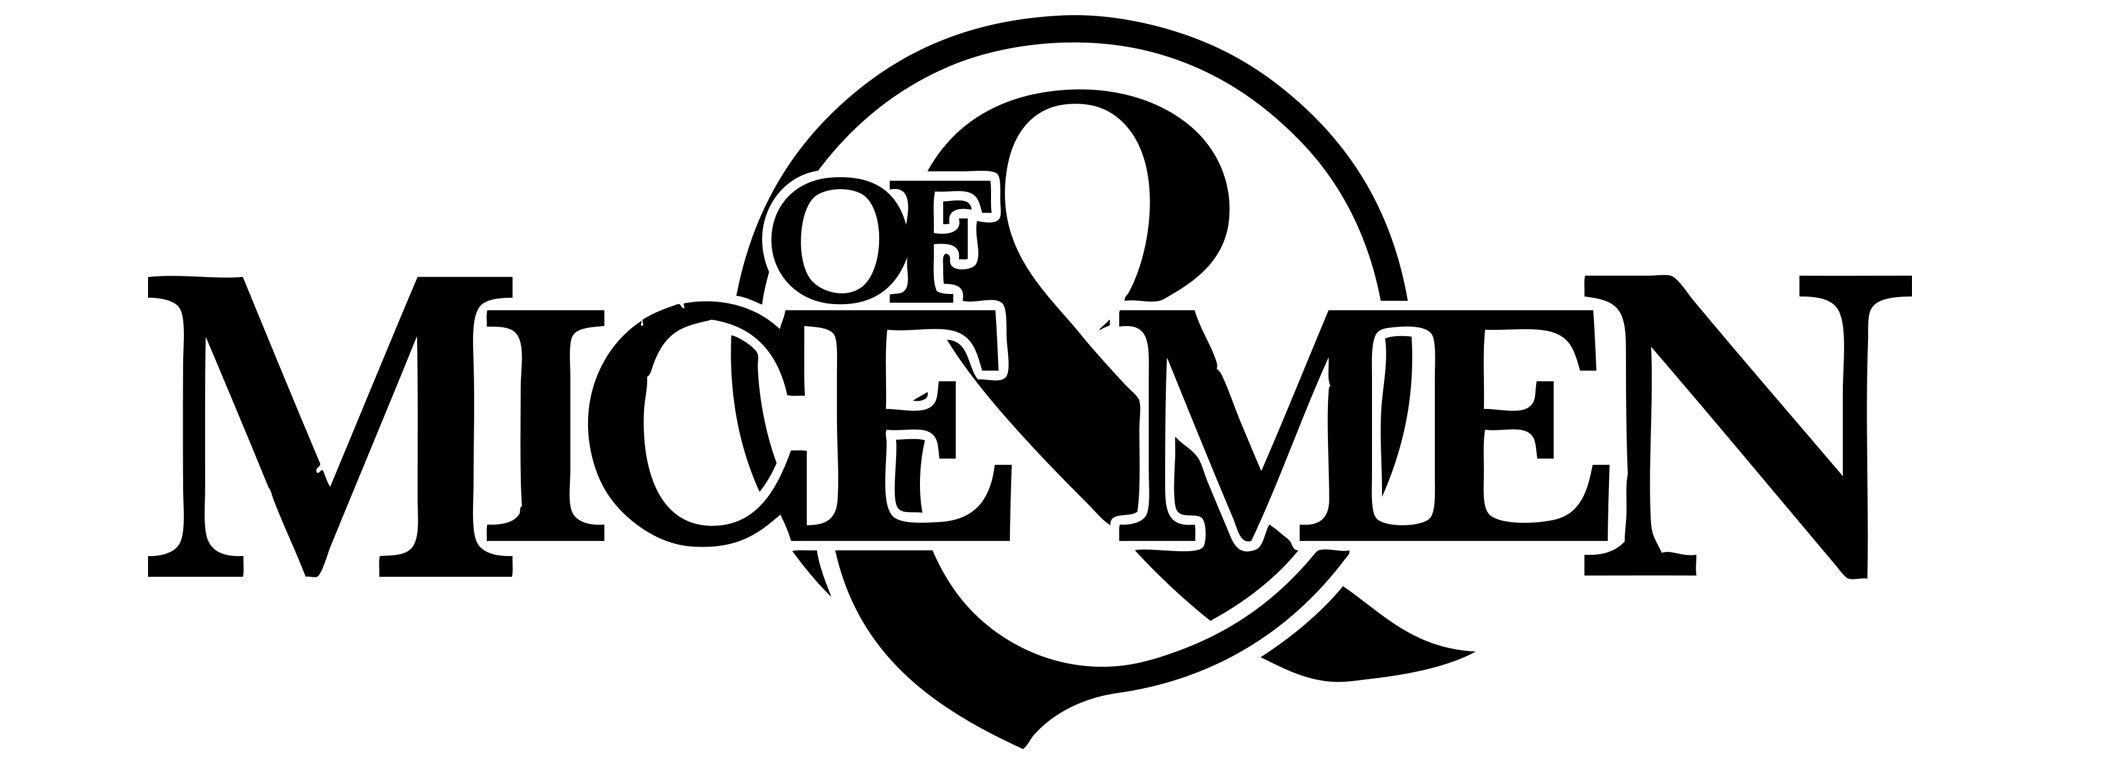 Men Logo - File:Of mice & men logo.jpg - Wikimedia Commons